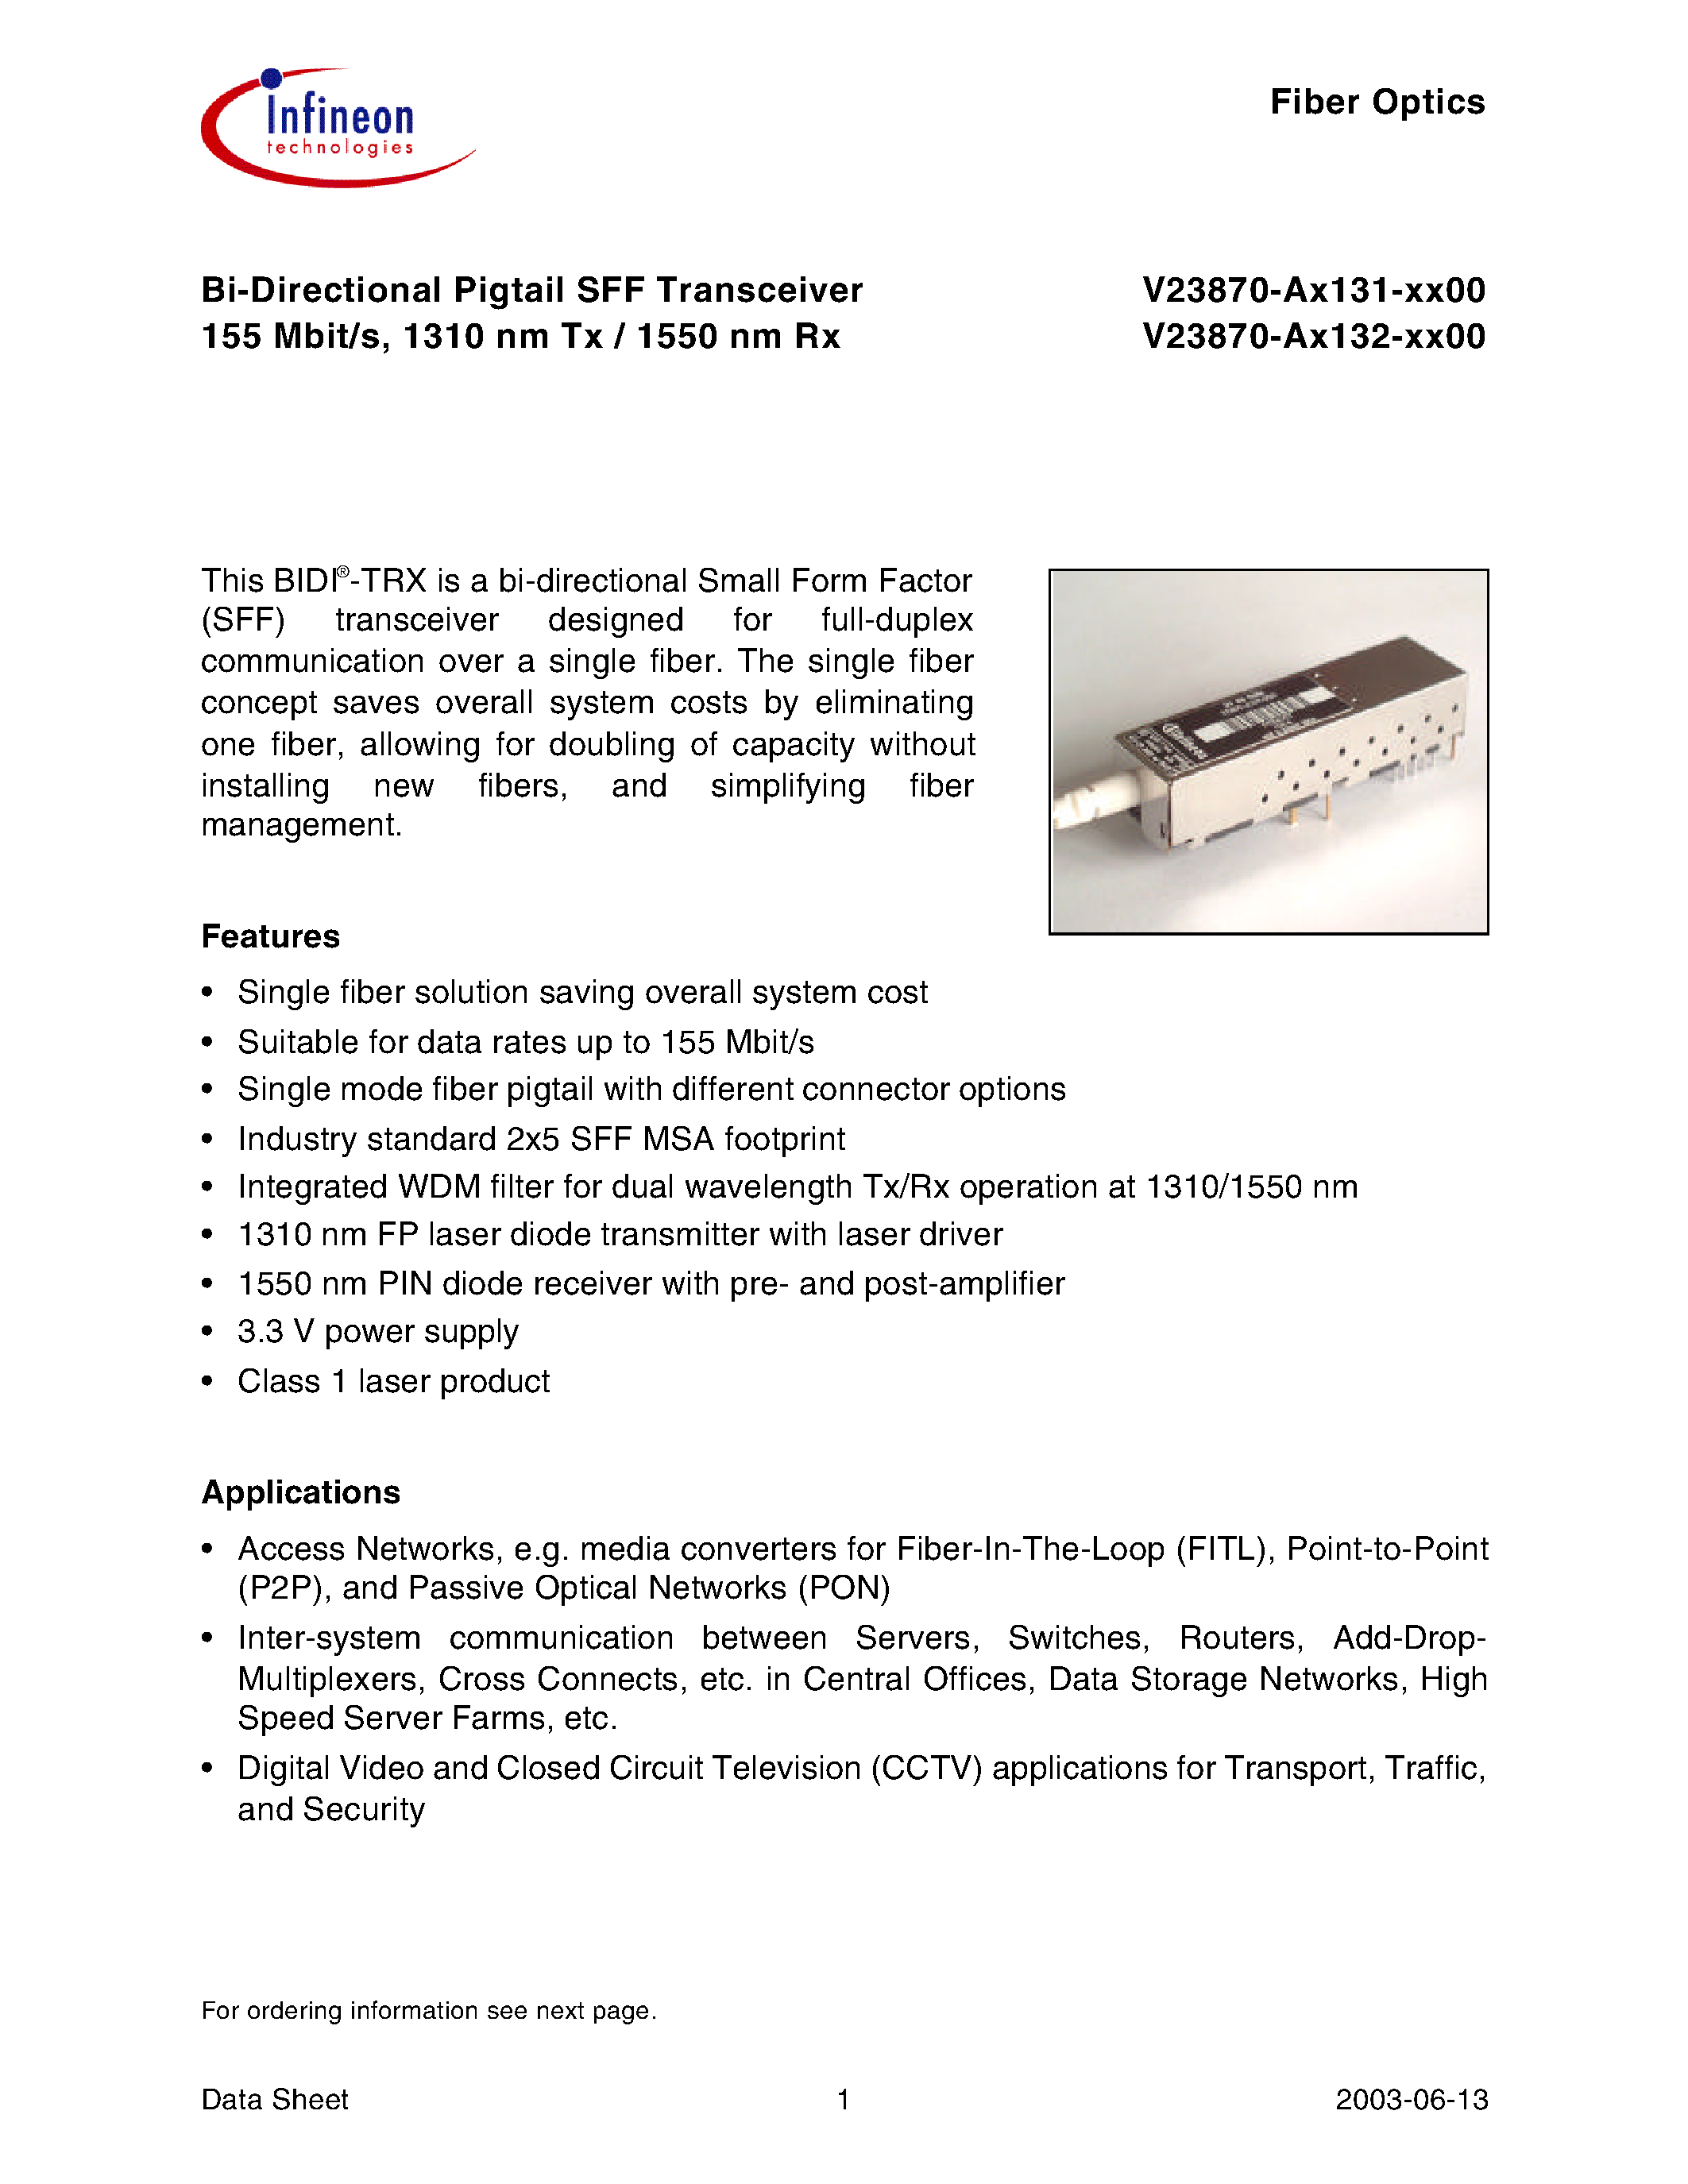 Даташит V23870-A3131-C100 - Bi-Directional Pigtail SFF Transceiver 155 Mbit/s/ 1310 nm Tx / 1550 nm Rx страница 1